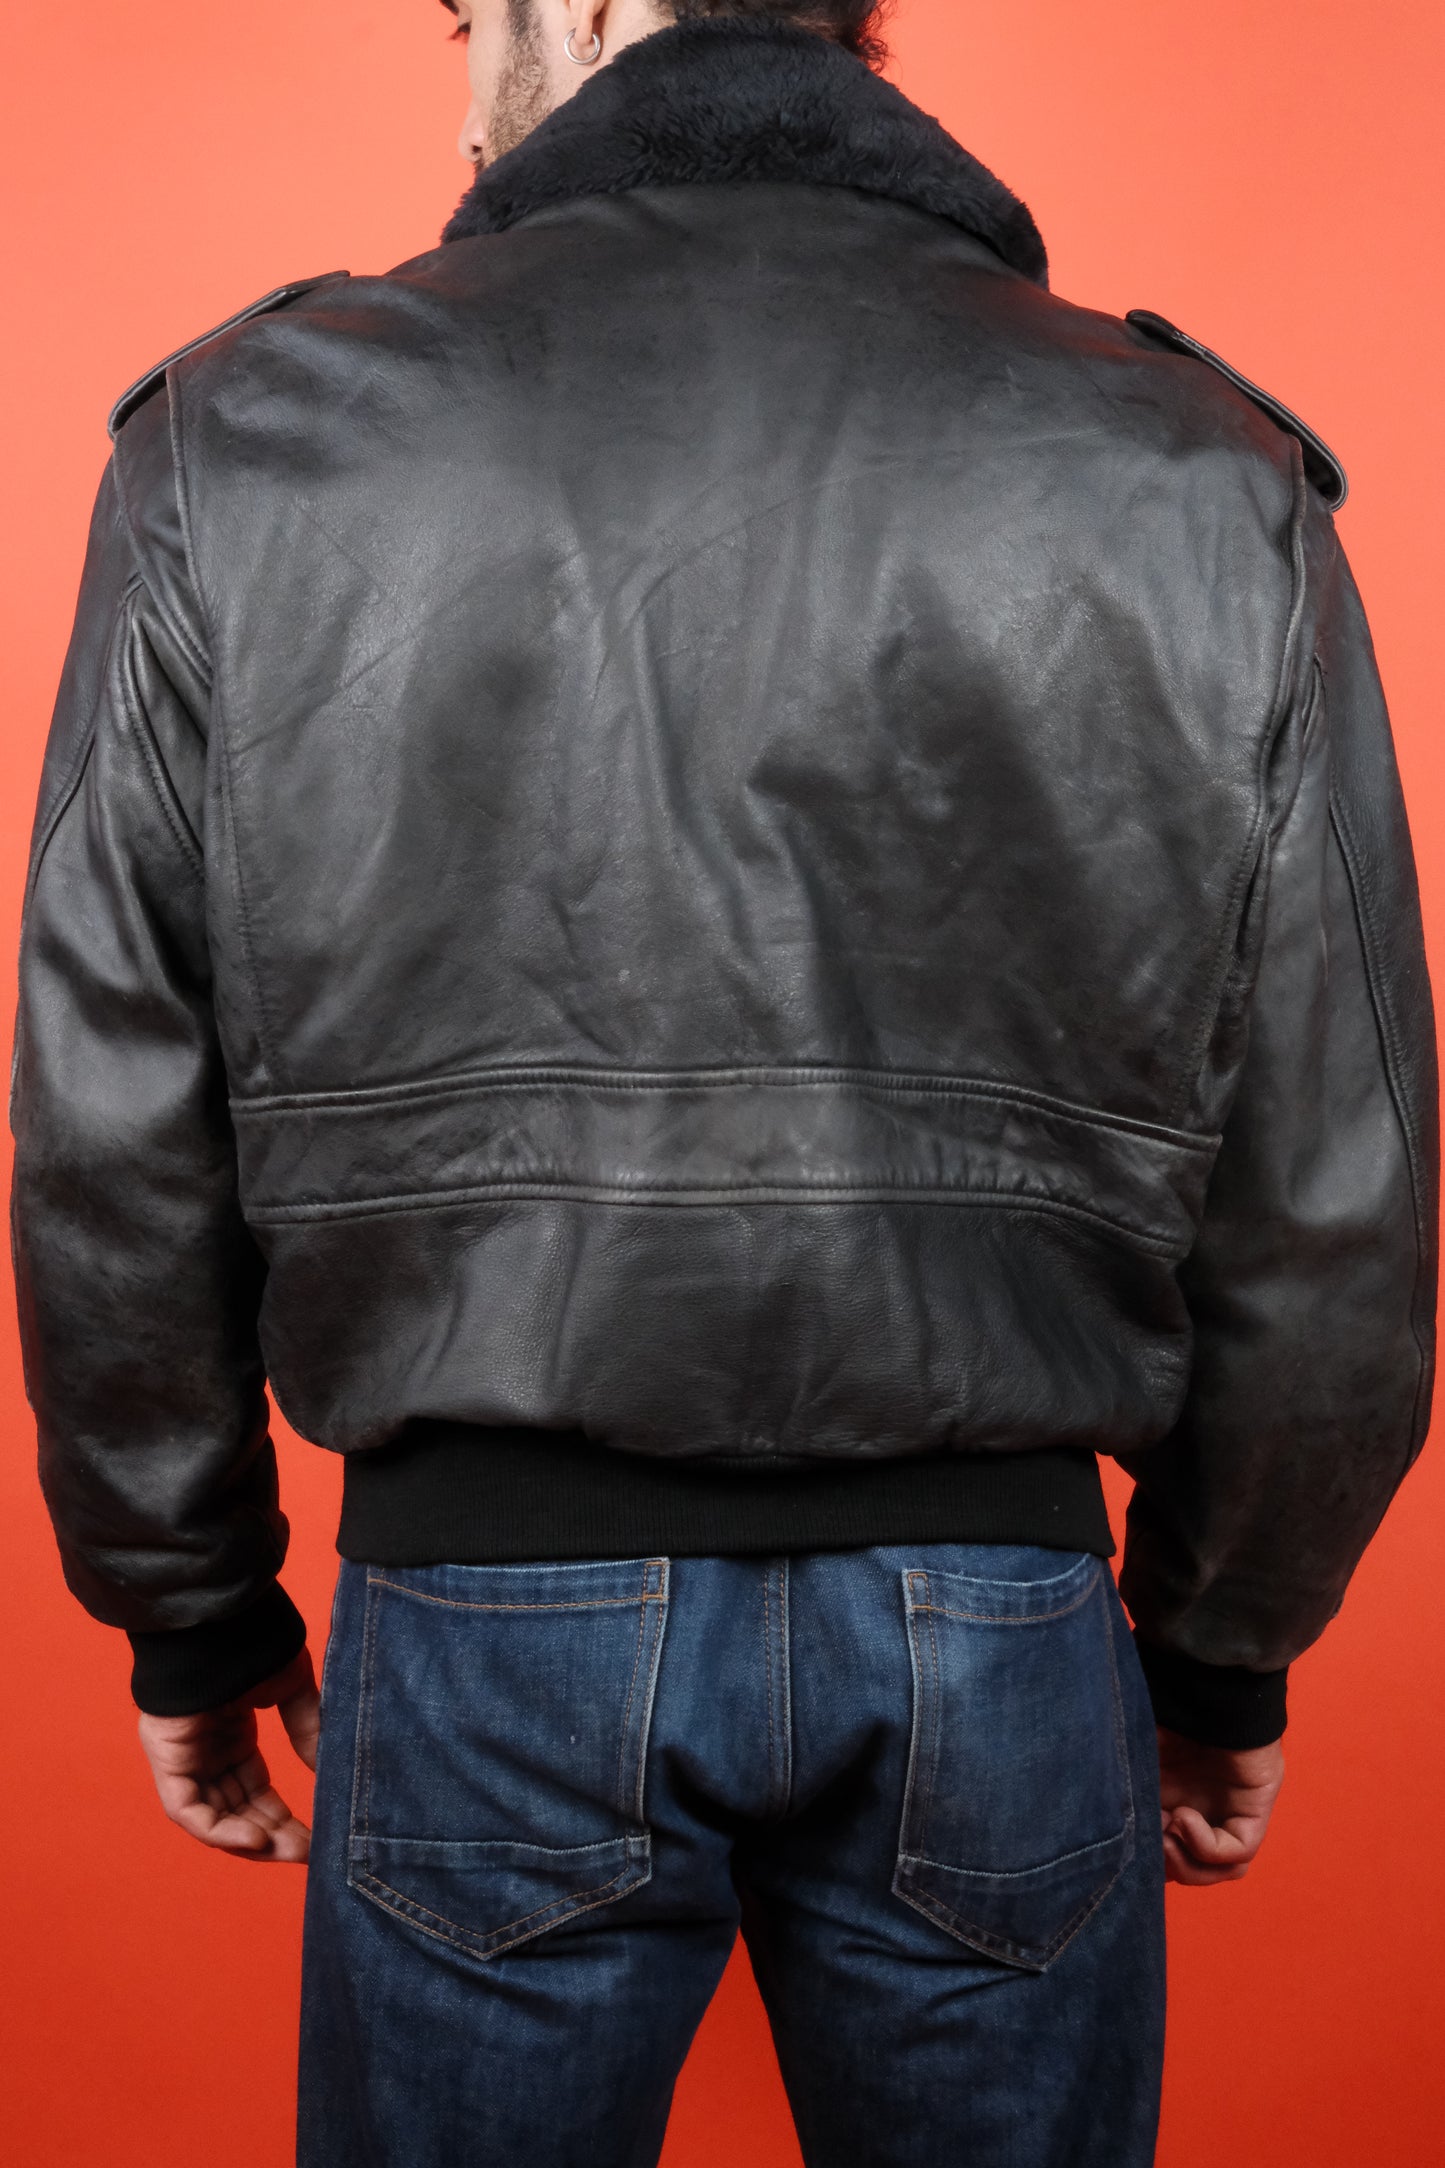 Leather Jacket Type A-2 w/ detachable Lining - vintage clothing clochard92.com